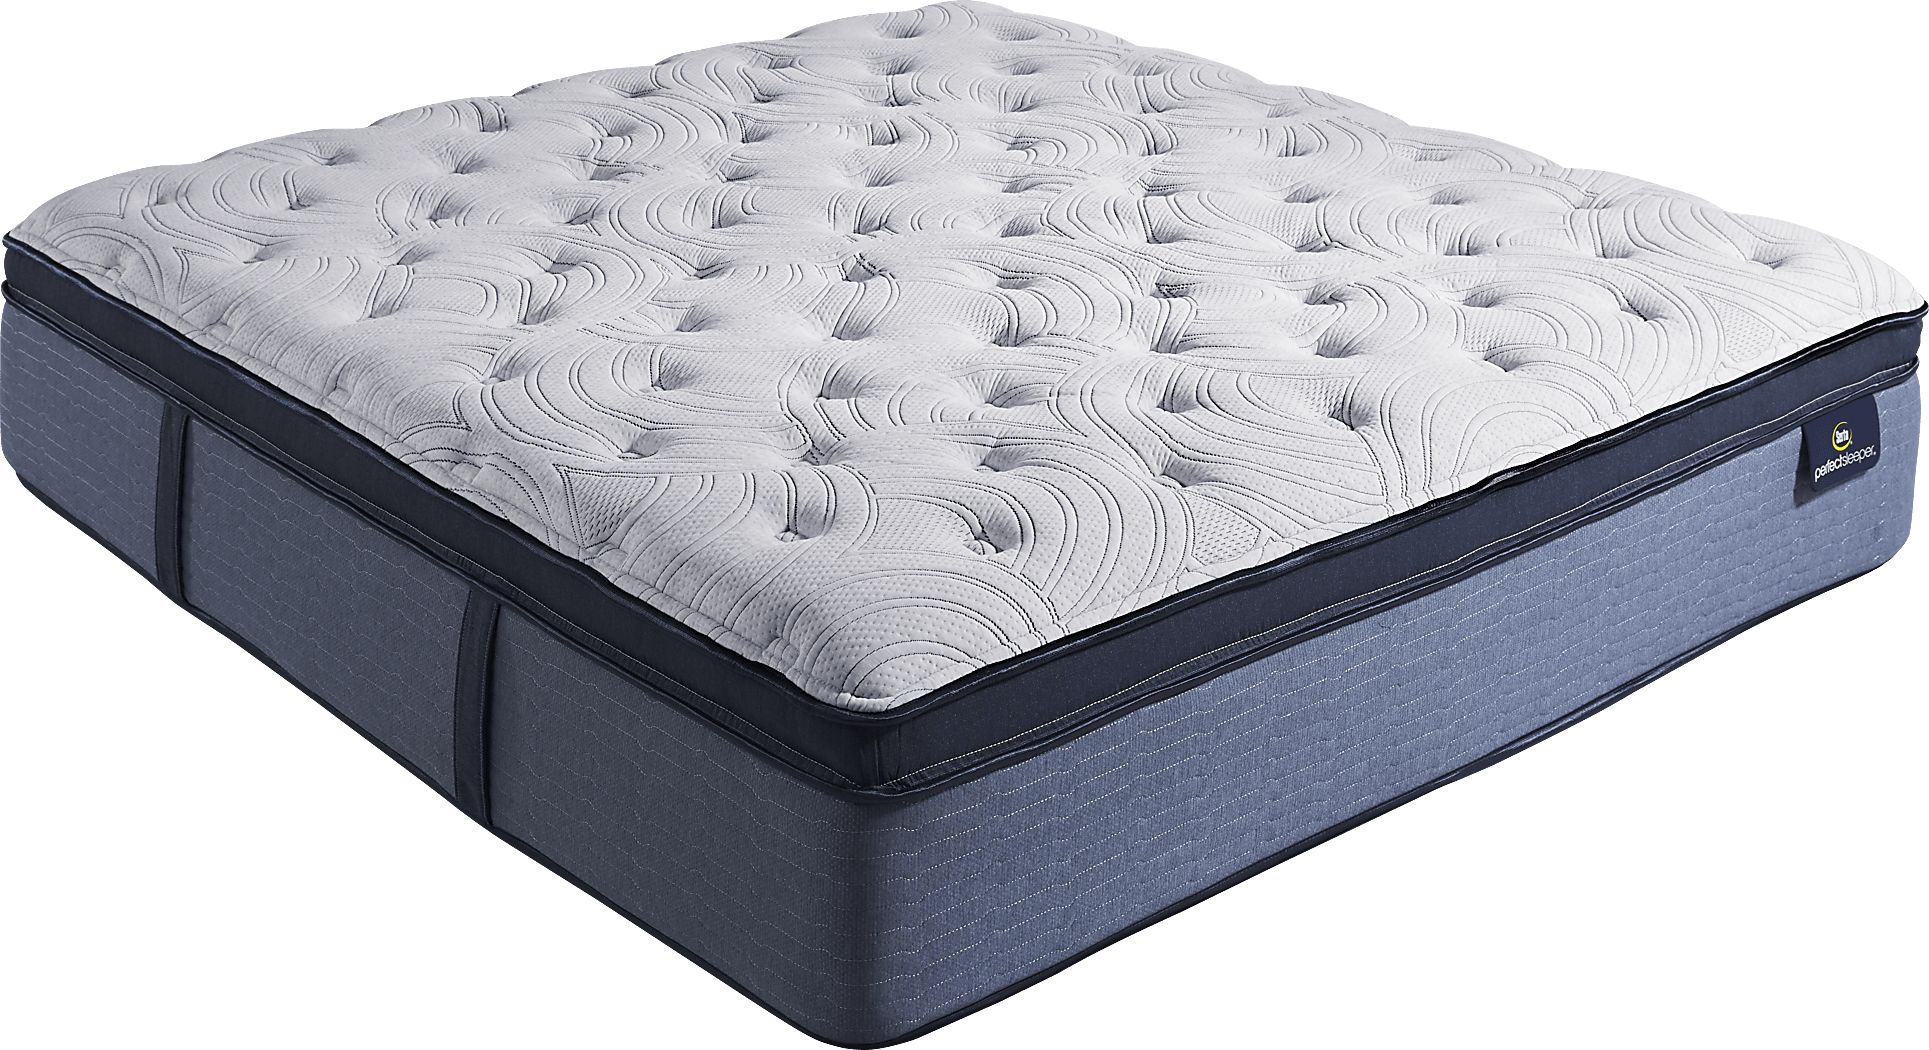 serta california king mattress for sale